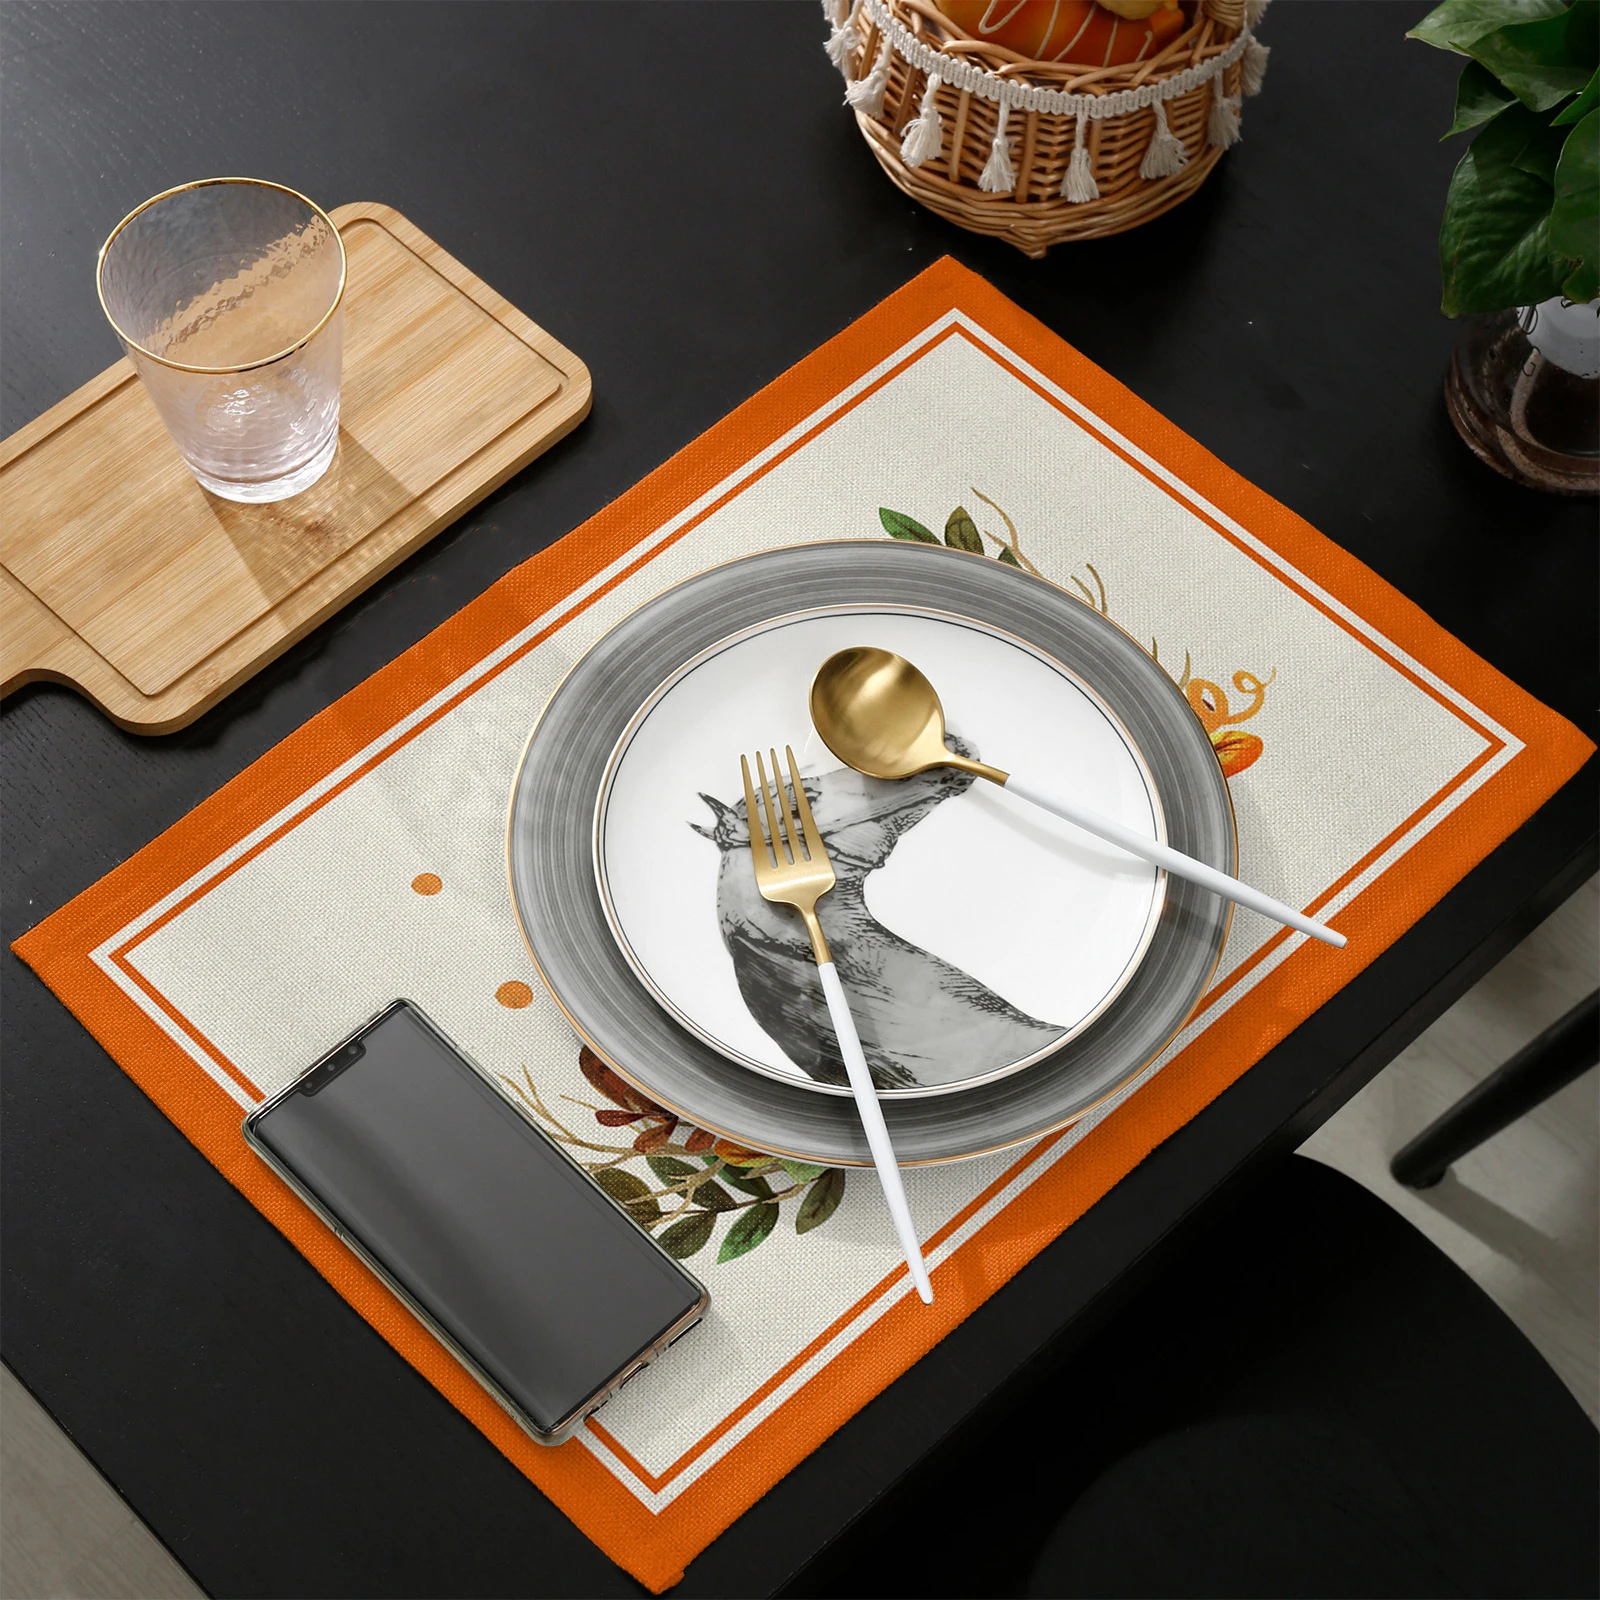 https://ae01.alicdn.com/kf/S06ac23d0bb7e47f69effba4ba7edaf58U/4-6pcs-Placemats-Thanksgiving-Fall-Pumpkin-Farm-Kitchen-Dining-Table-Decor-Accessories-Heat-Resistant-Linen-Tableware.jpg